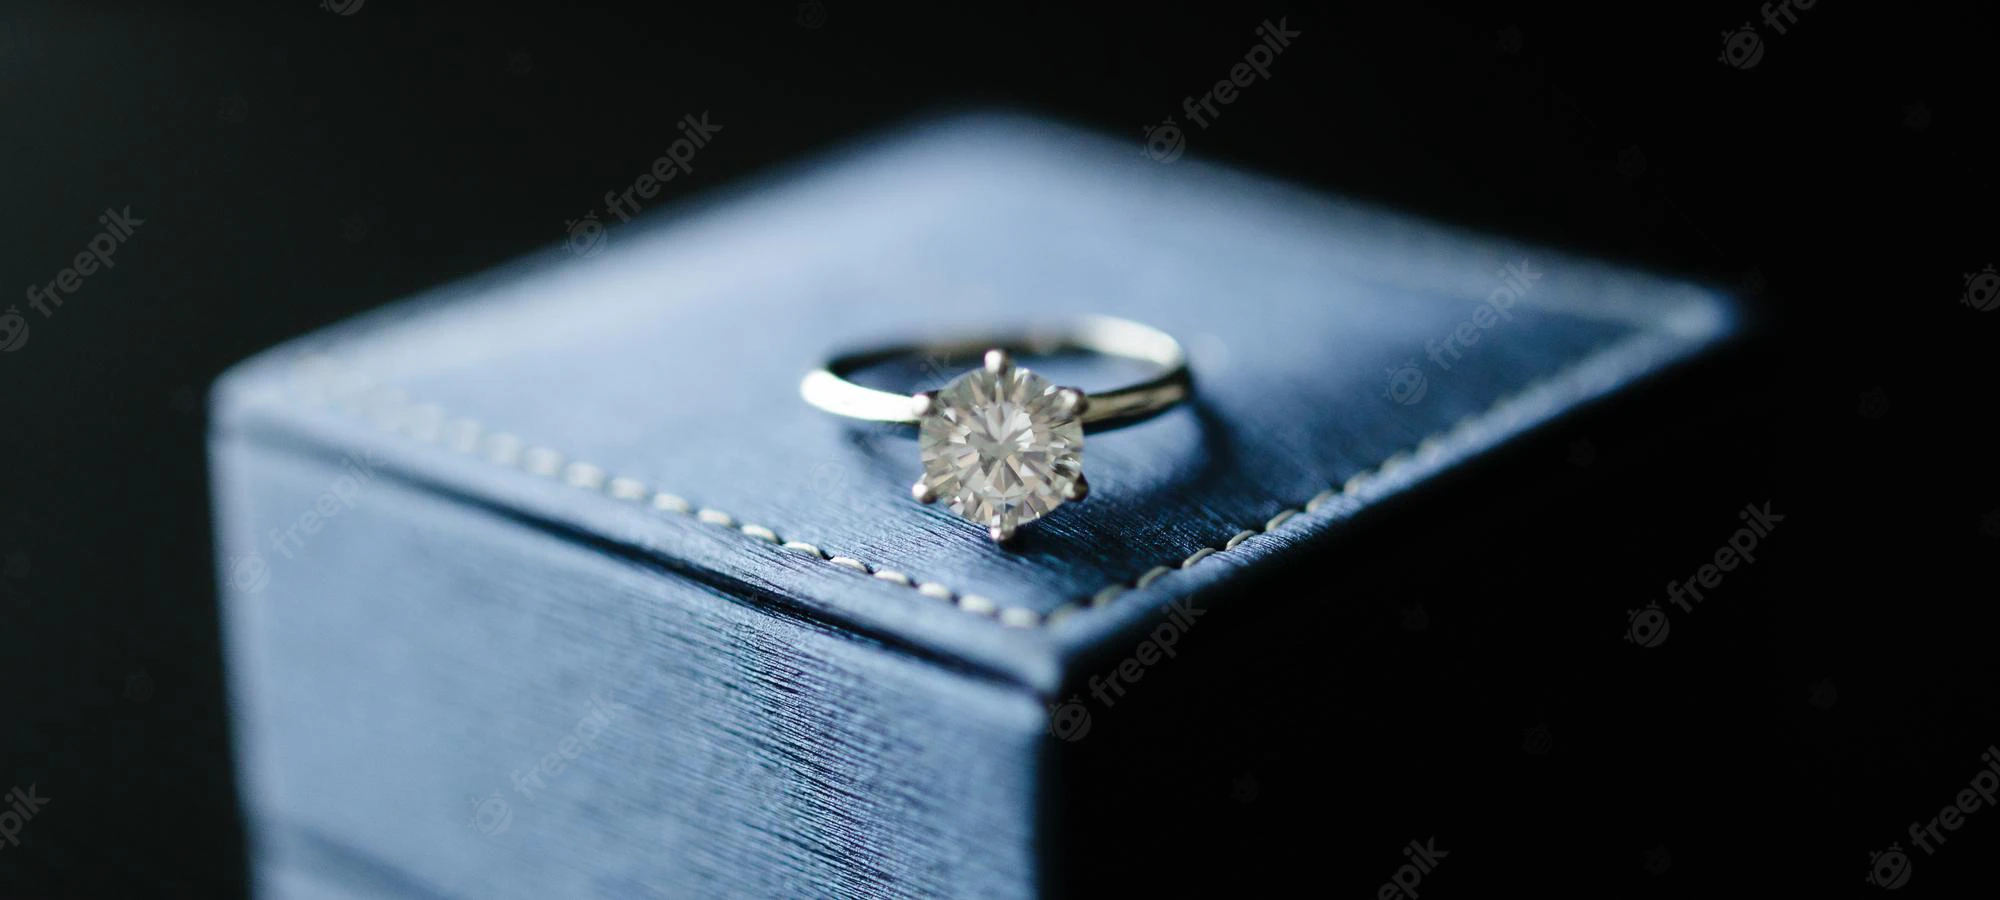 Vintage Diamond Rings